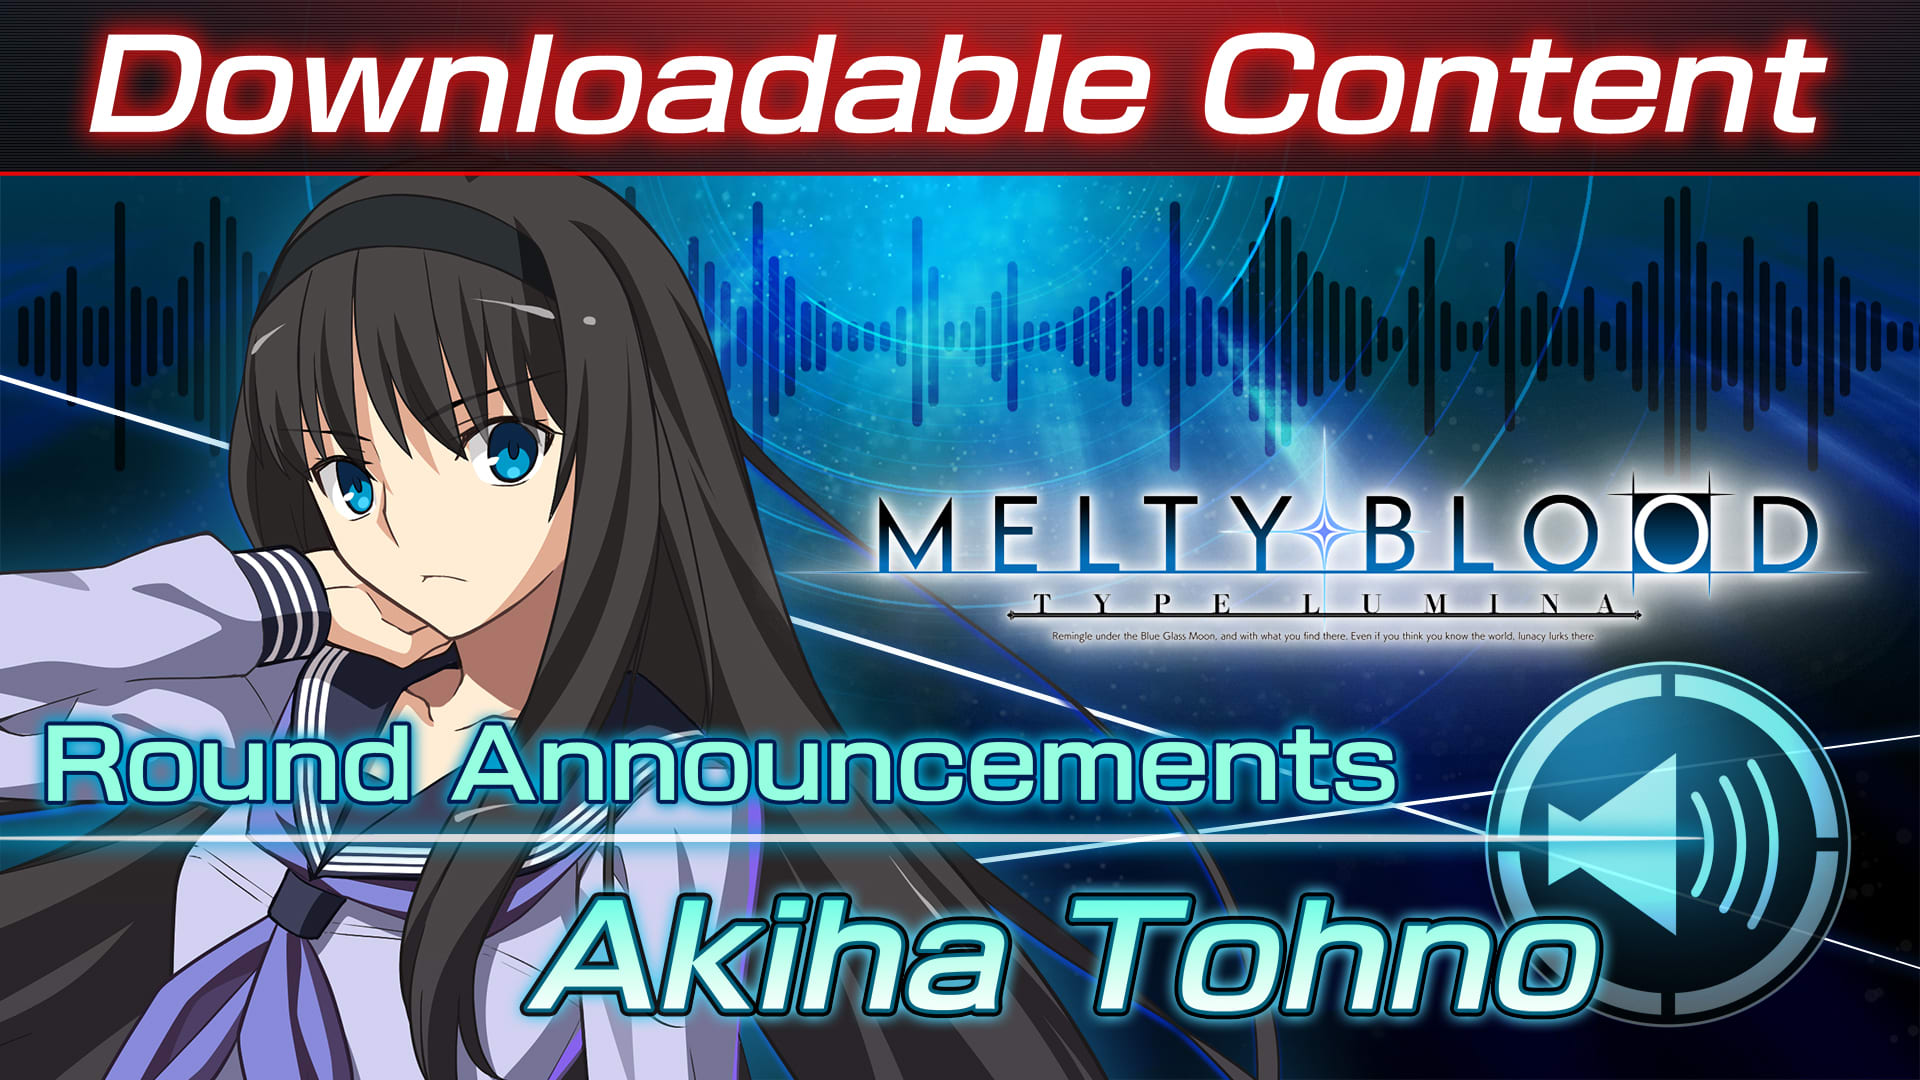 DLC: Akiha Tohno Round Announcements